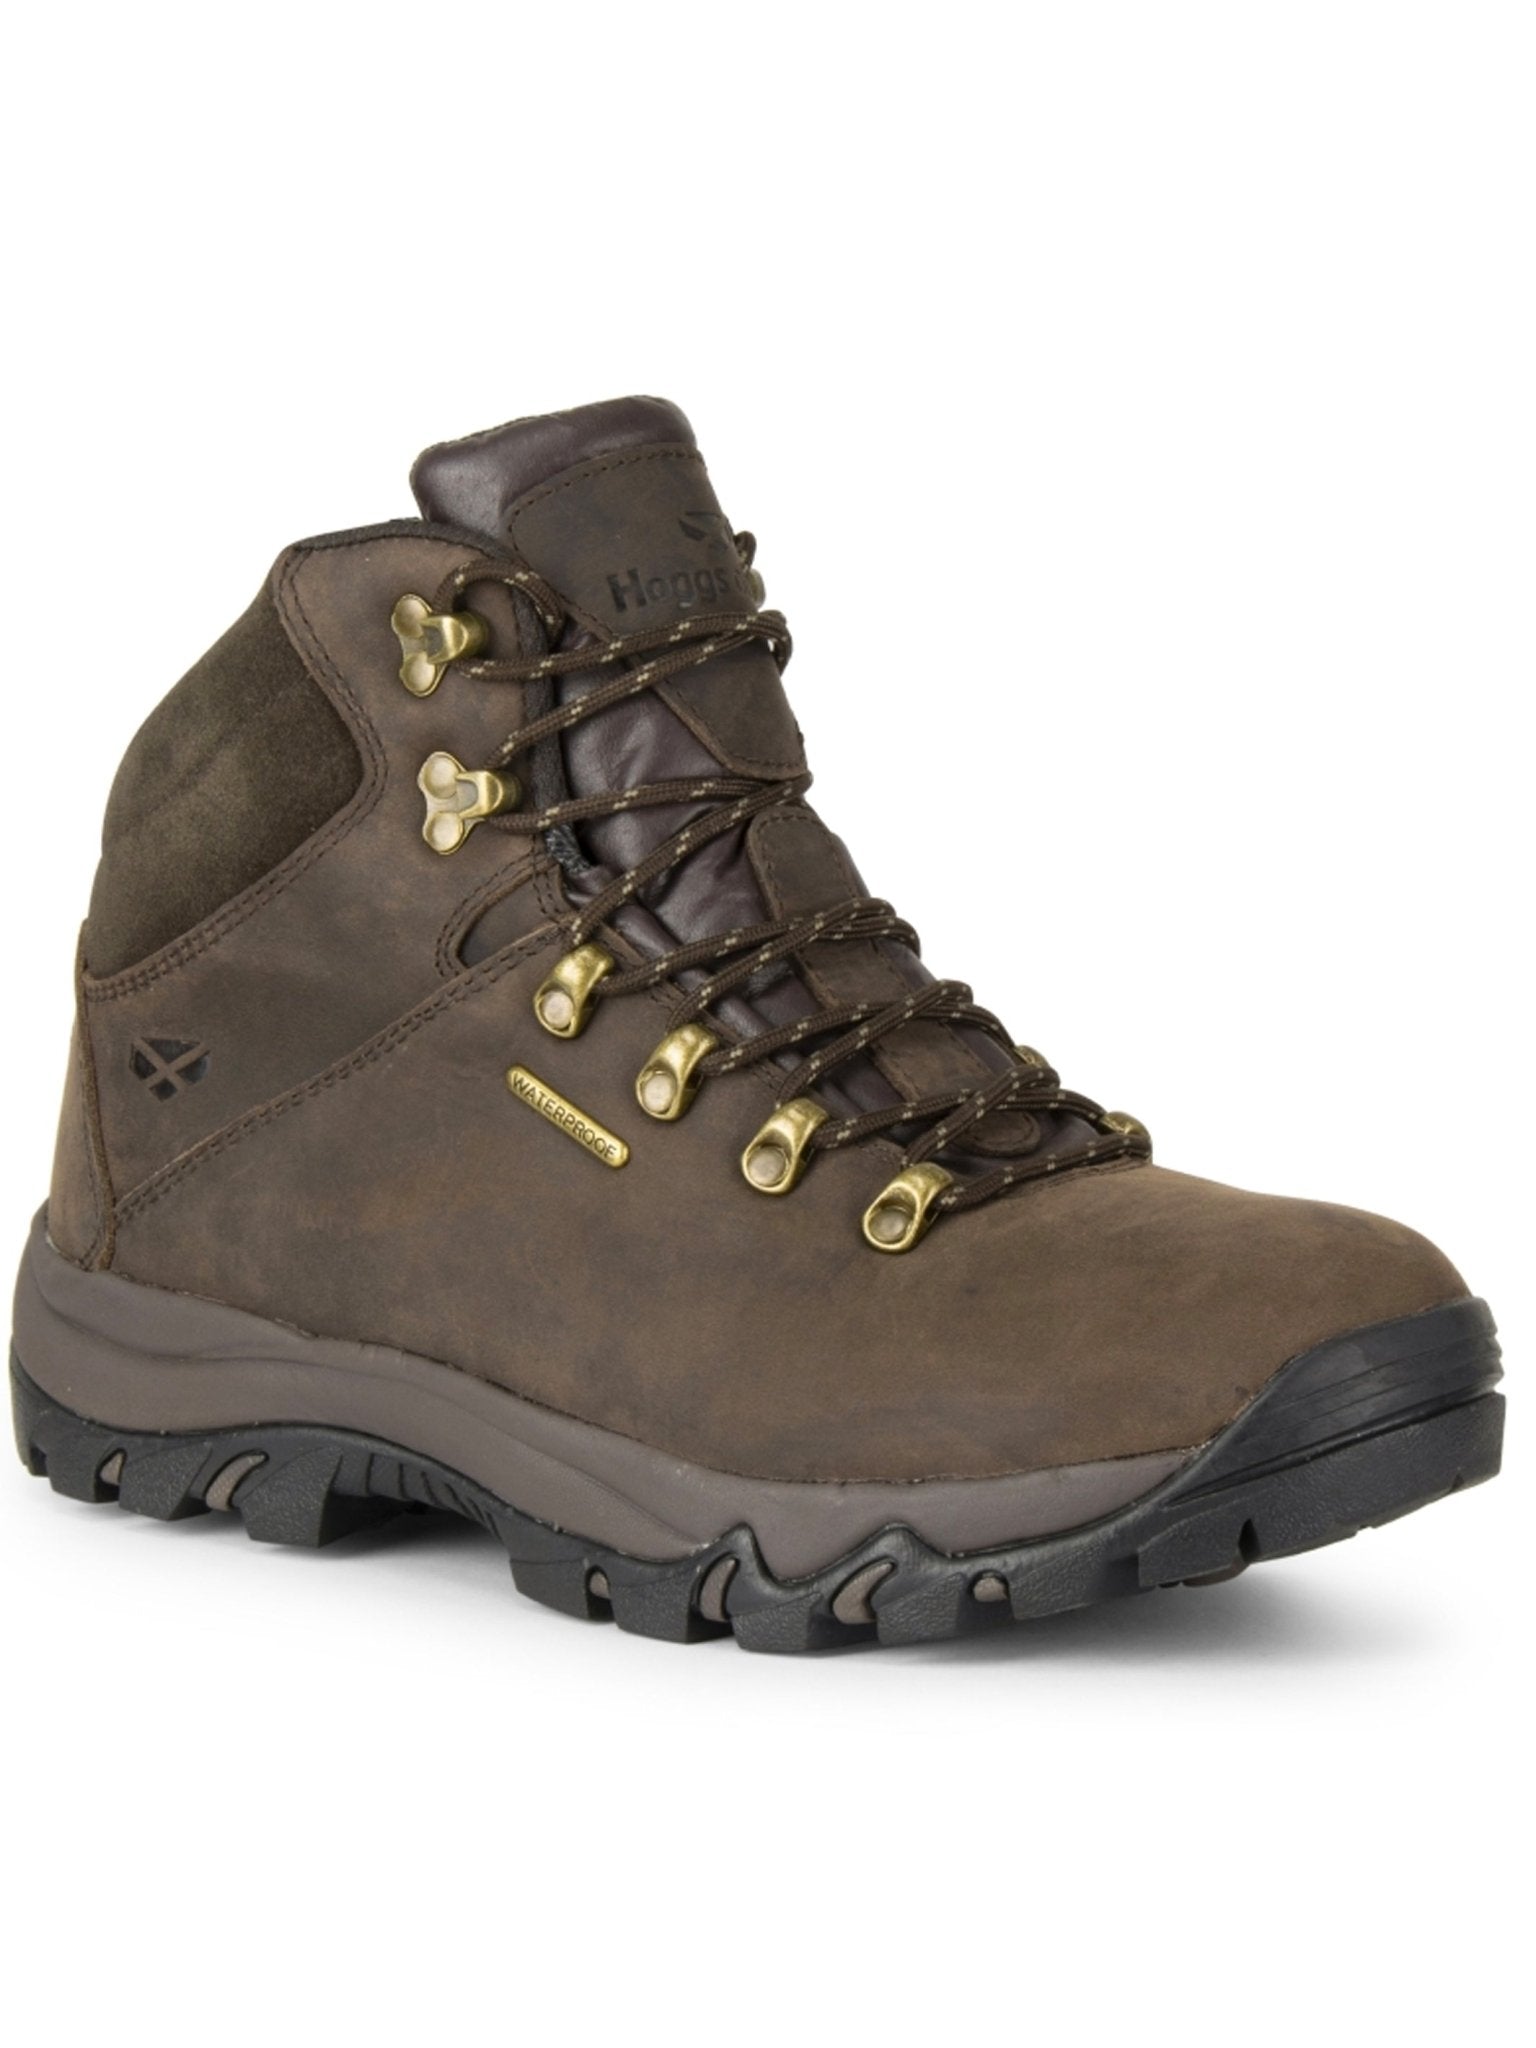 4elementsclothingHoggs of FifeHoggs of Fife - Waterproof leather walking Boot / waterproof hiking boot - GlencoeBootsGCOE/BR/36